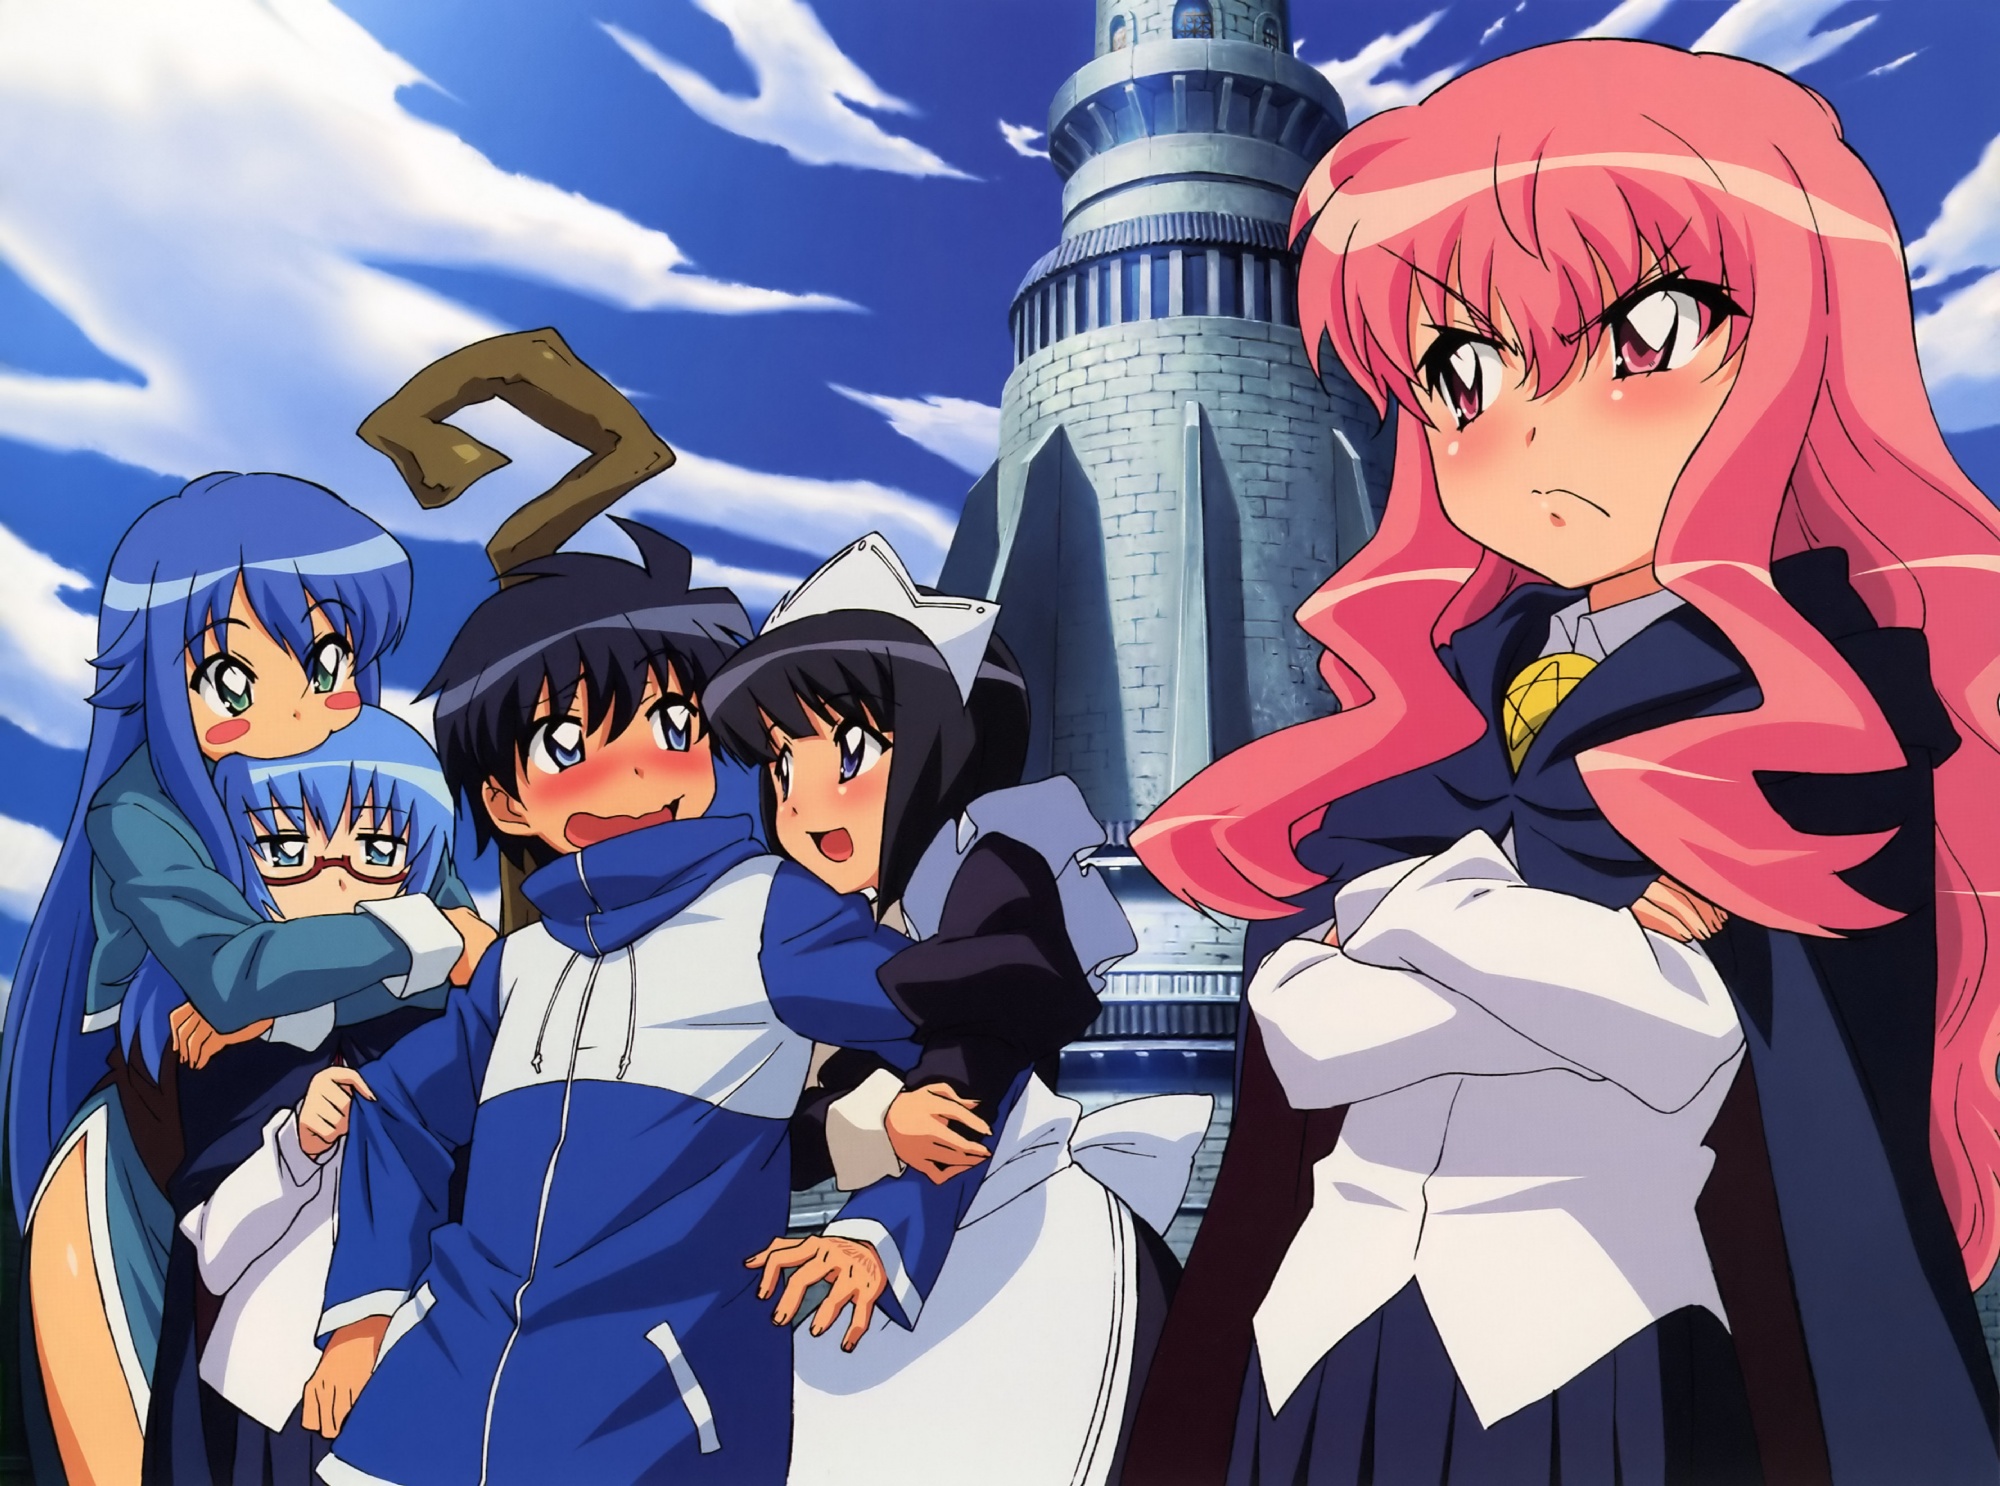 Anime characters from Zero No Tsukaima series: Tabitha, Saito, Sylphid, Siesta, and Louise.